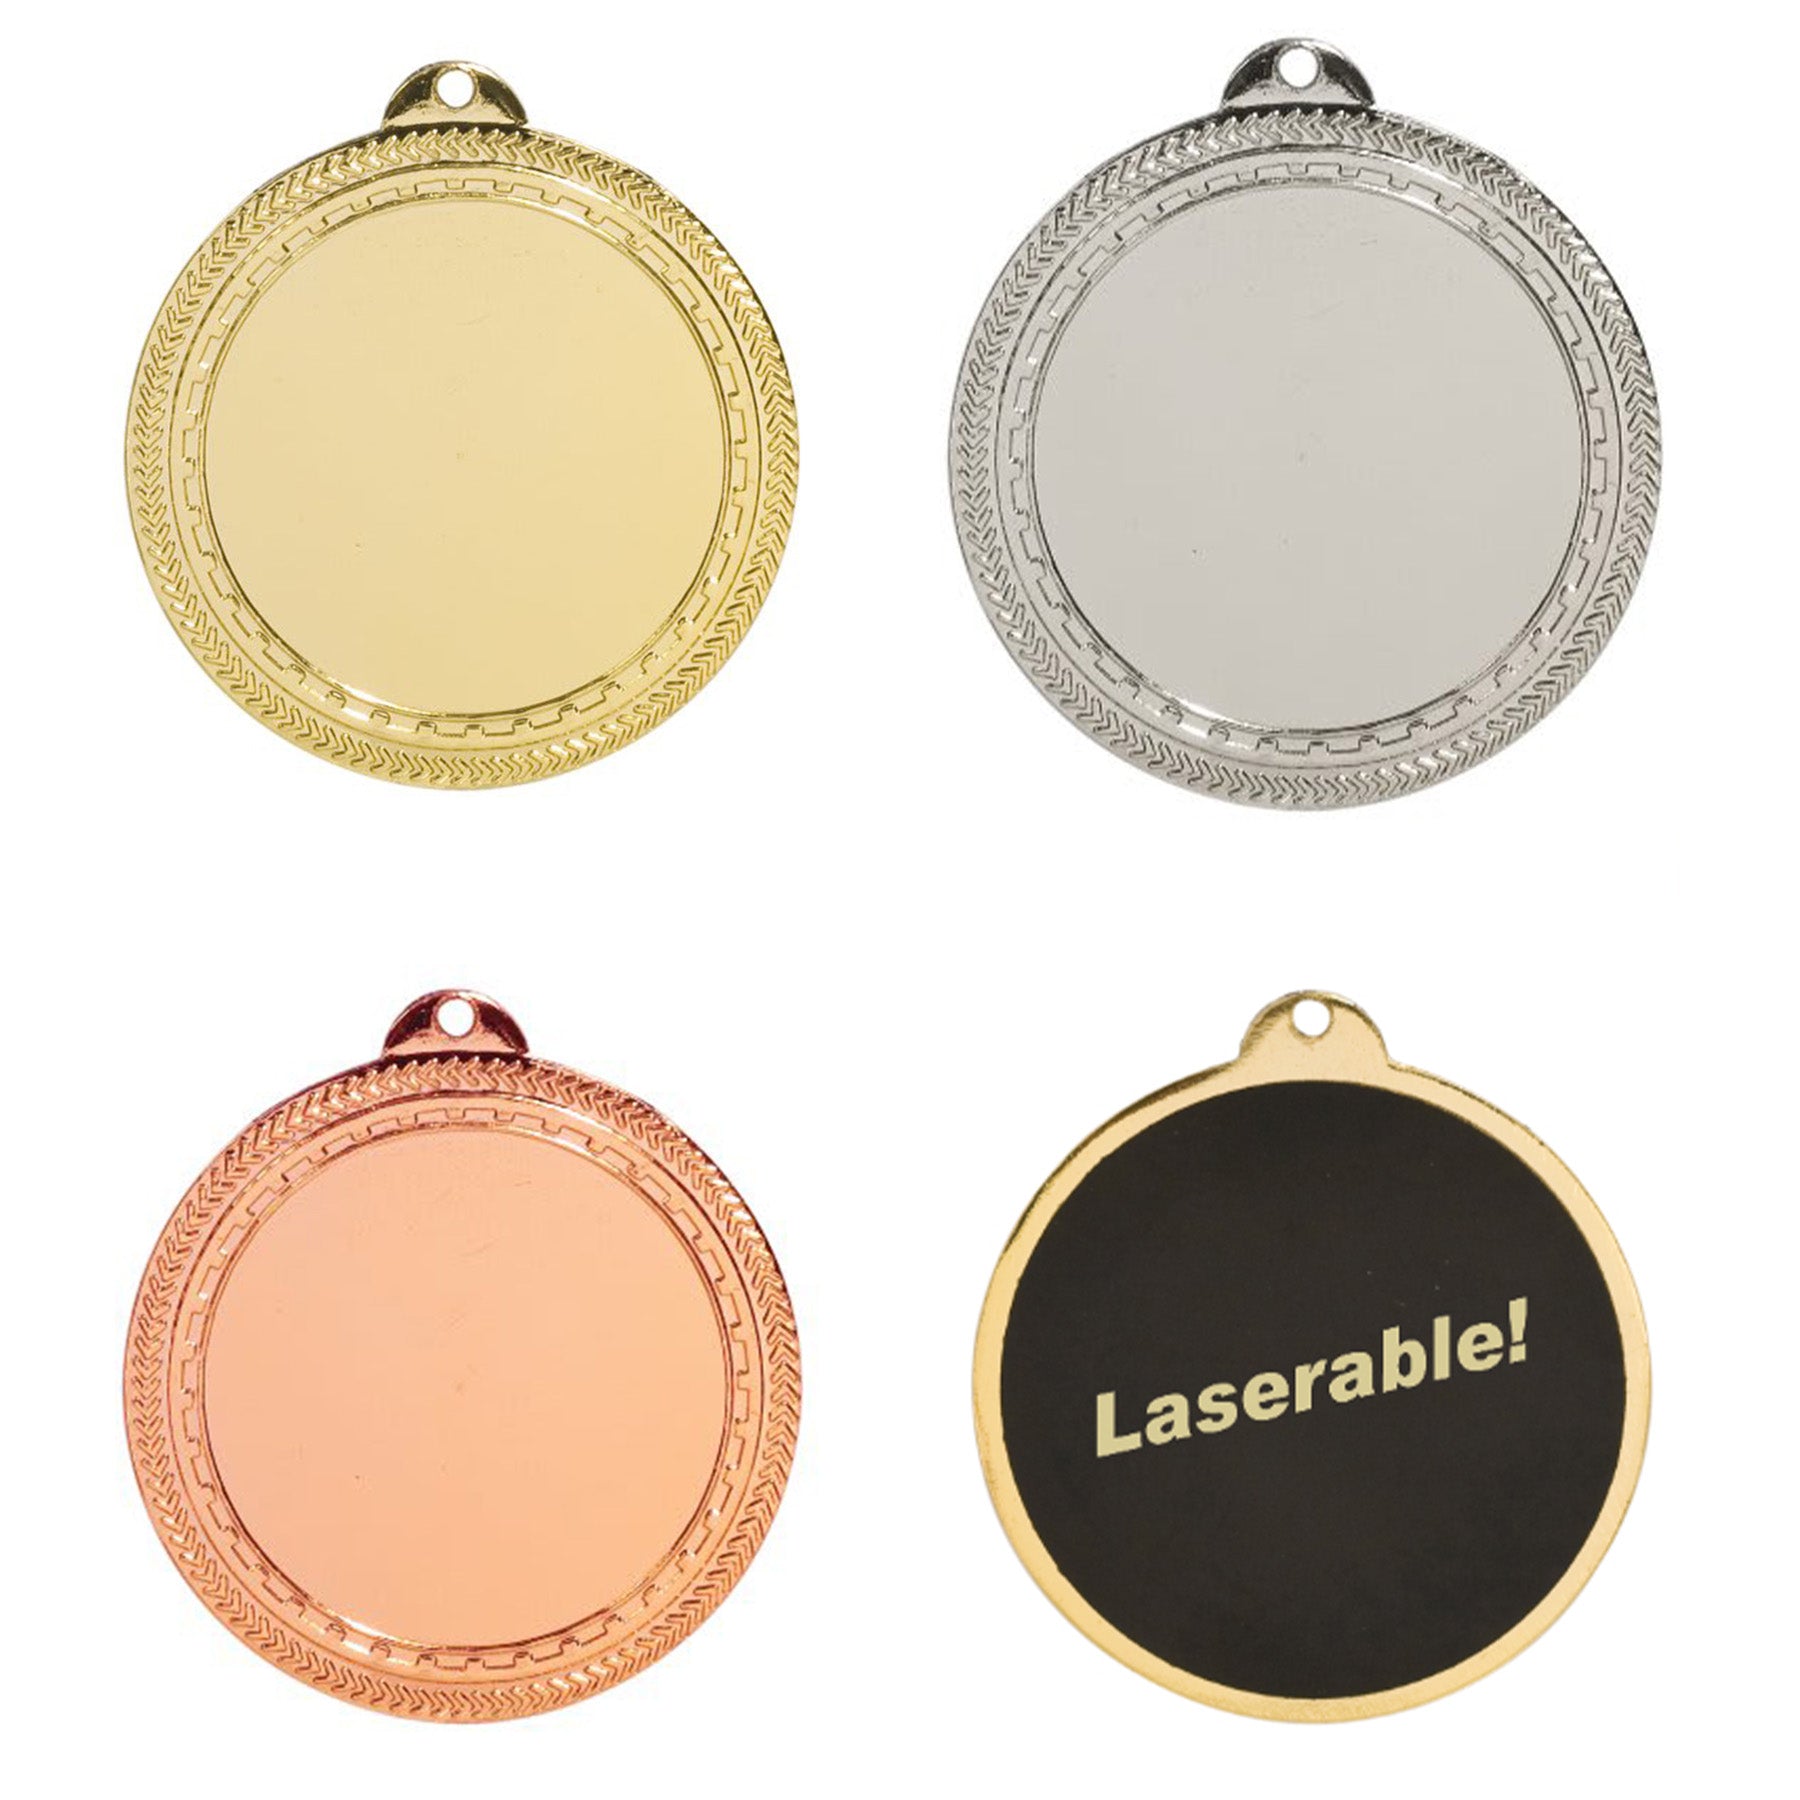 Laserable BriteLazer Medal, 2" Insert Holder - Craftworks NW, LLC